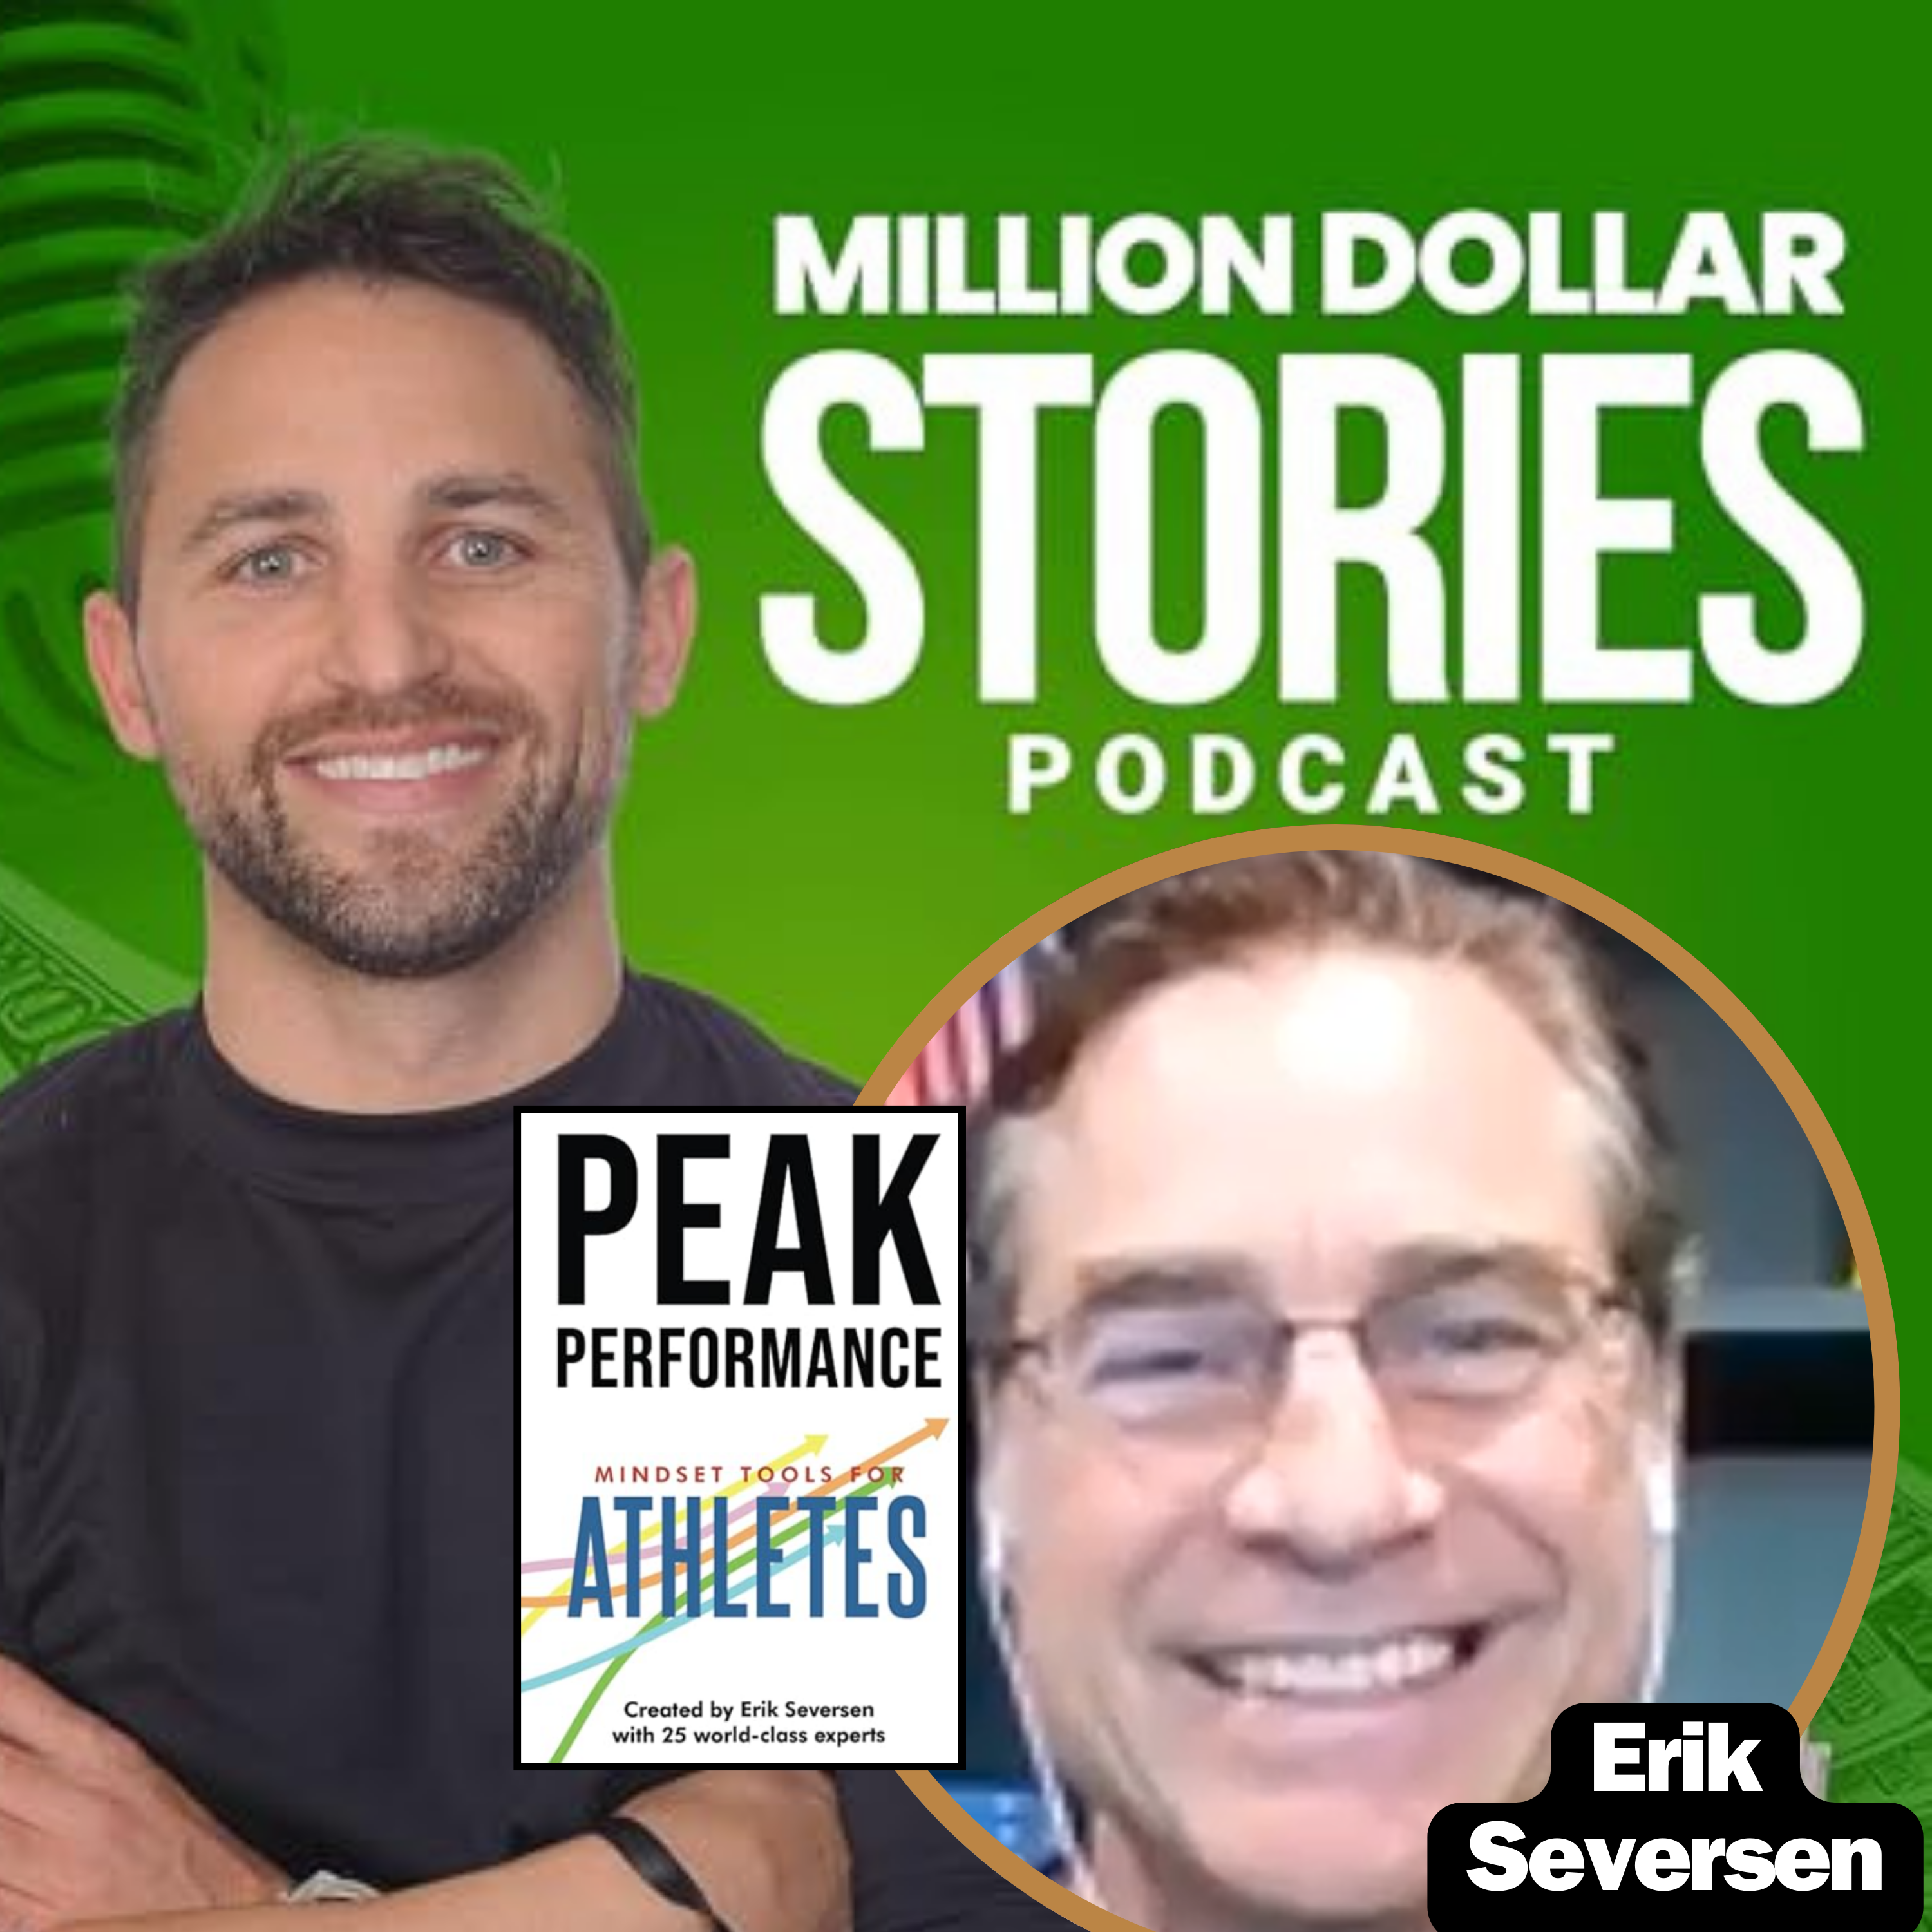 Erik Seversen – Author of “Peak Performance Mindset Tools for Athletes”